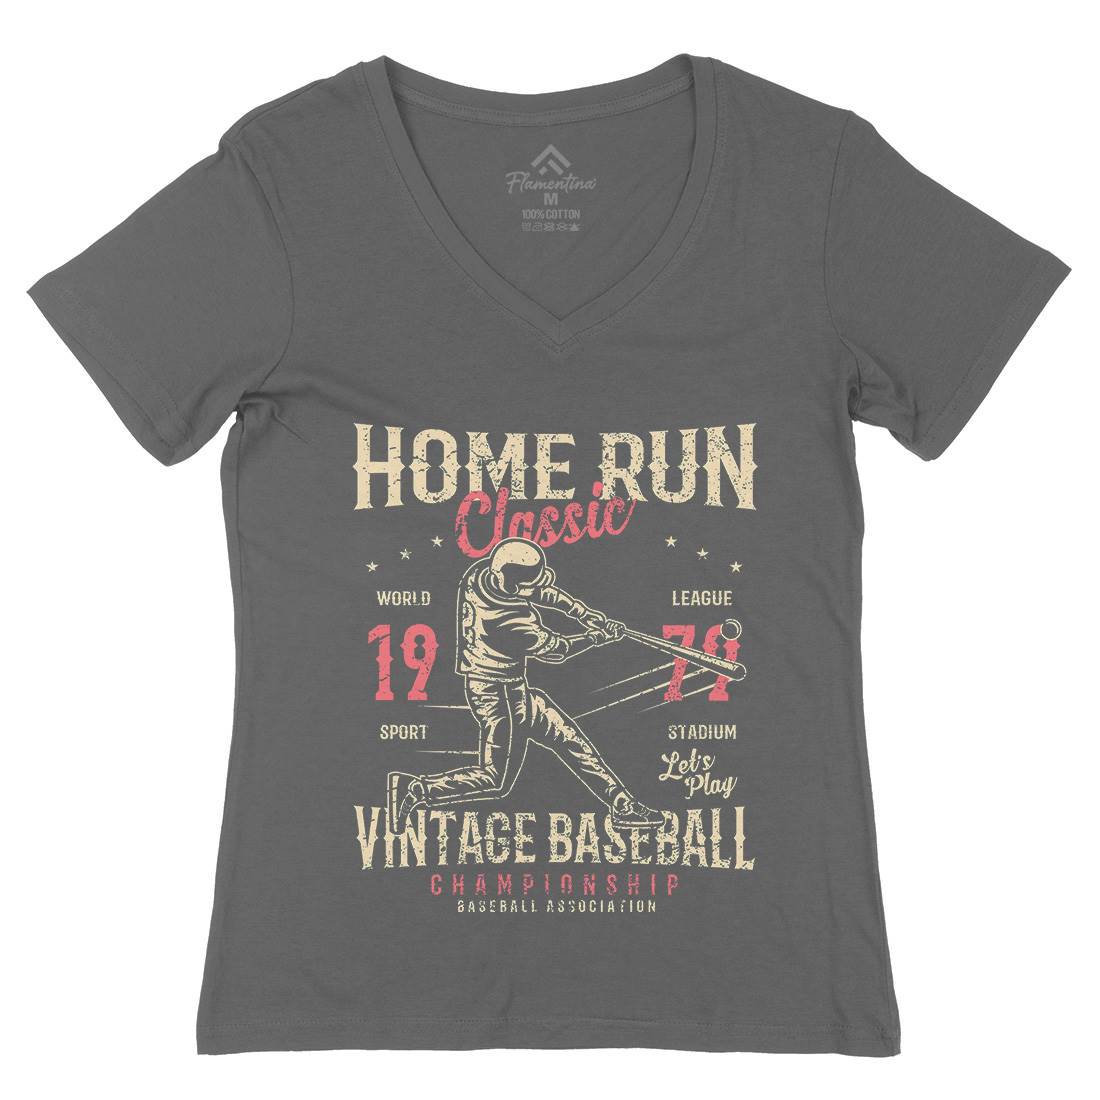 Home Run Classic Womens Organic V-Neck T-Shirt Sport A065